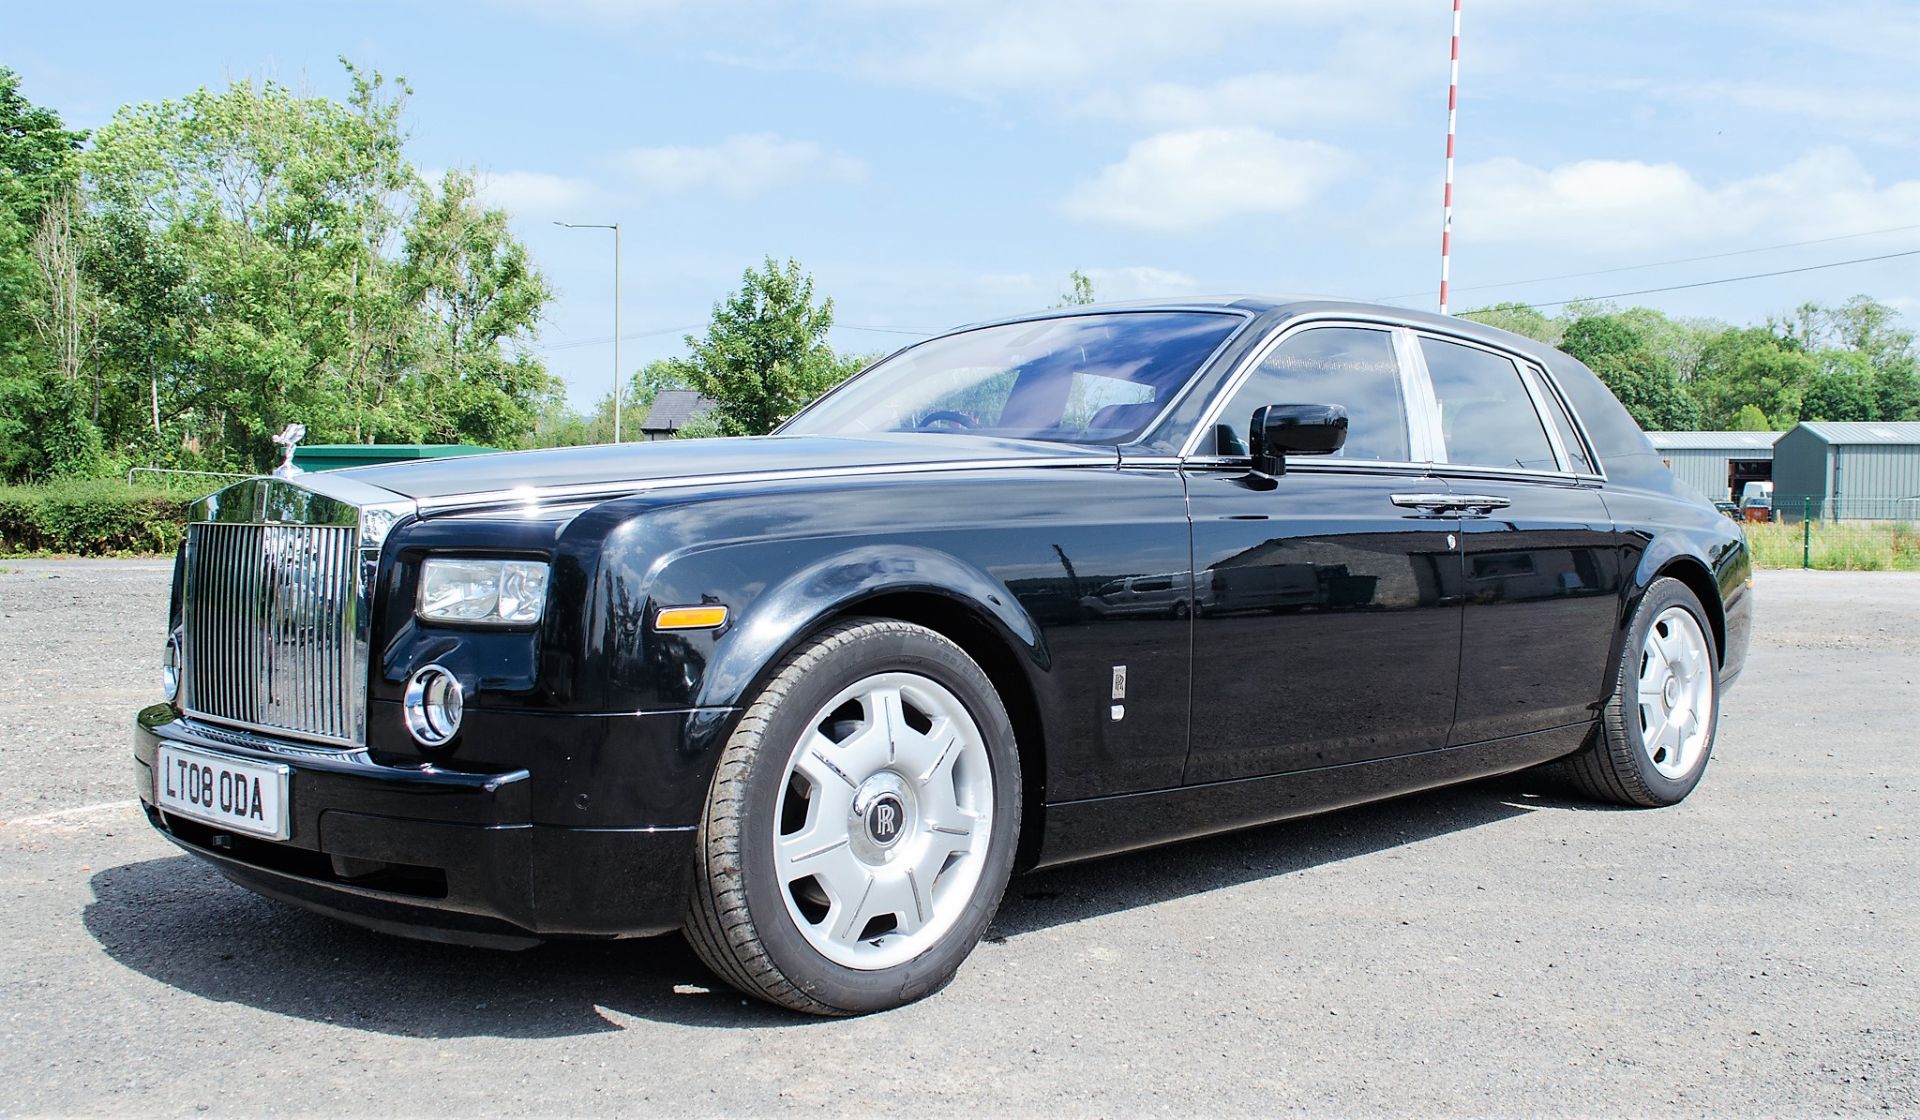 Rolls Royce Phantom VII 6.75 litre petrol 4 door saloon car  Reg No: LT 08 ODA Date of Registration: - Image 2 of 44